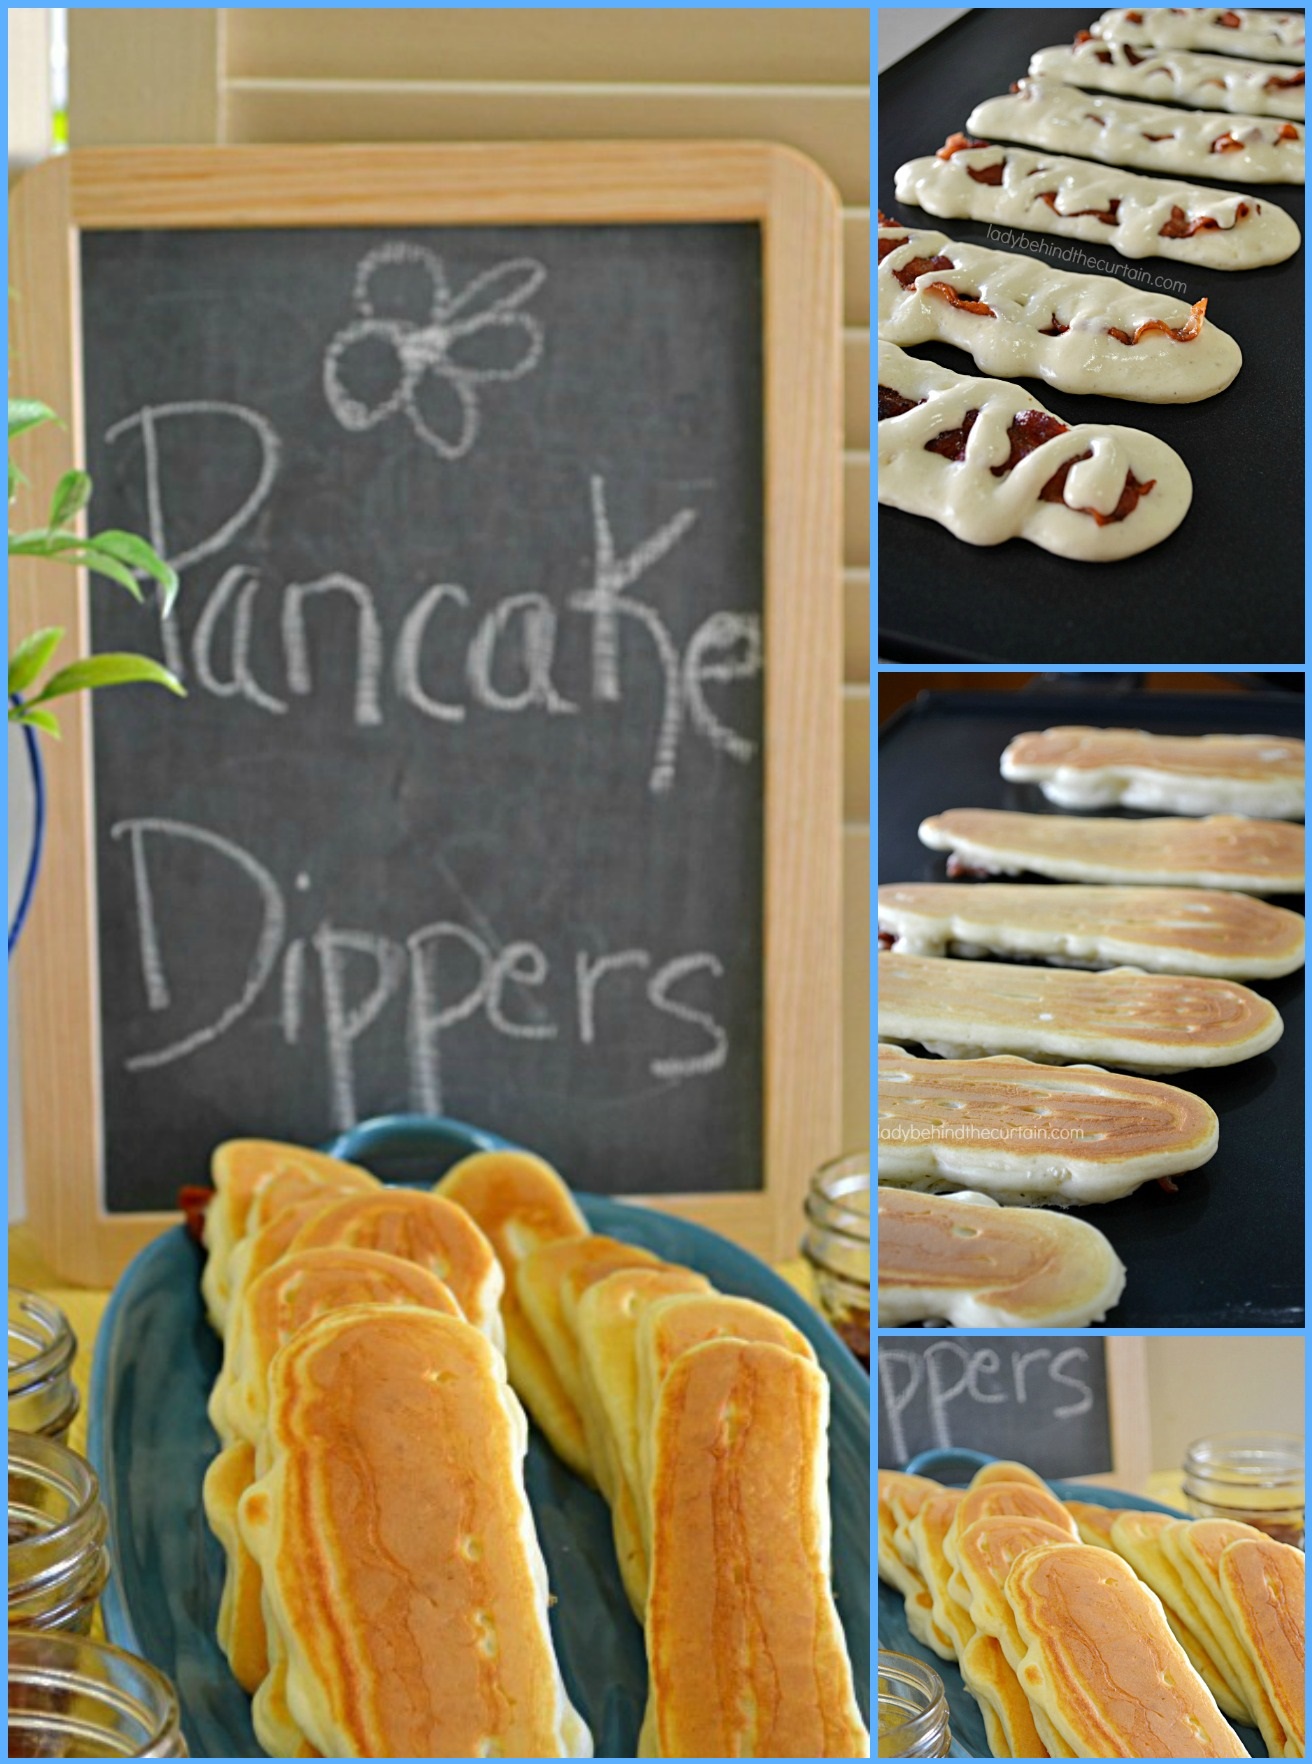 pancake-dippers.jpg